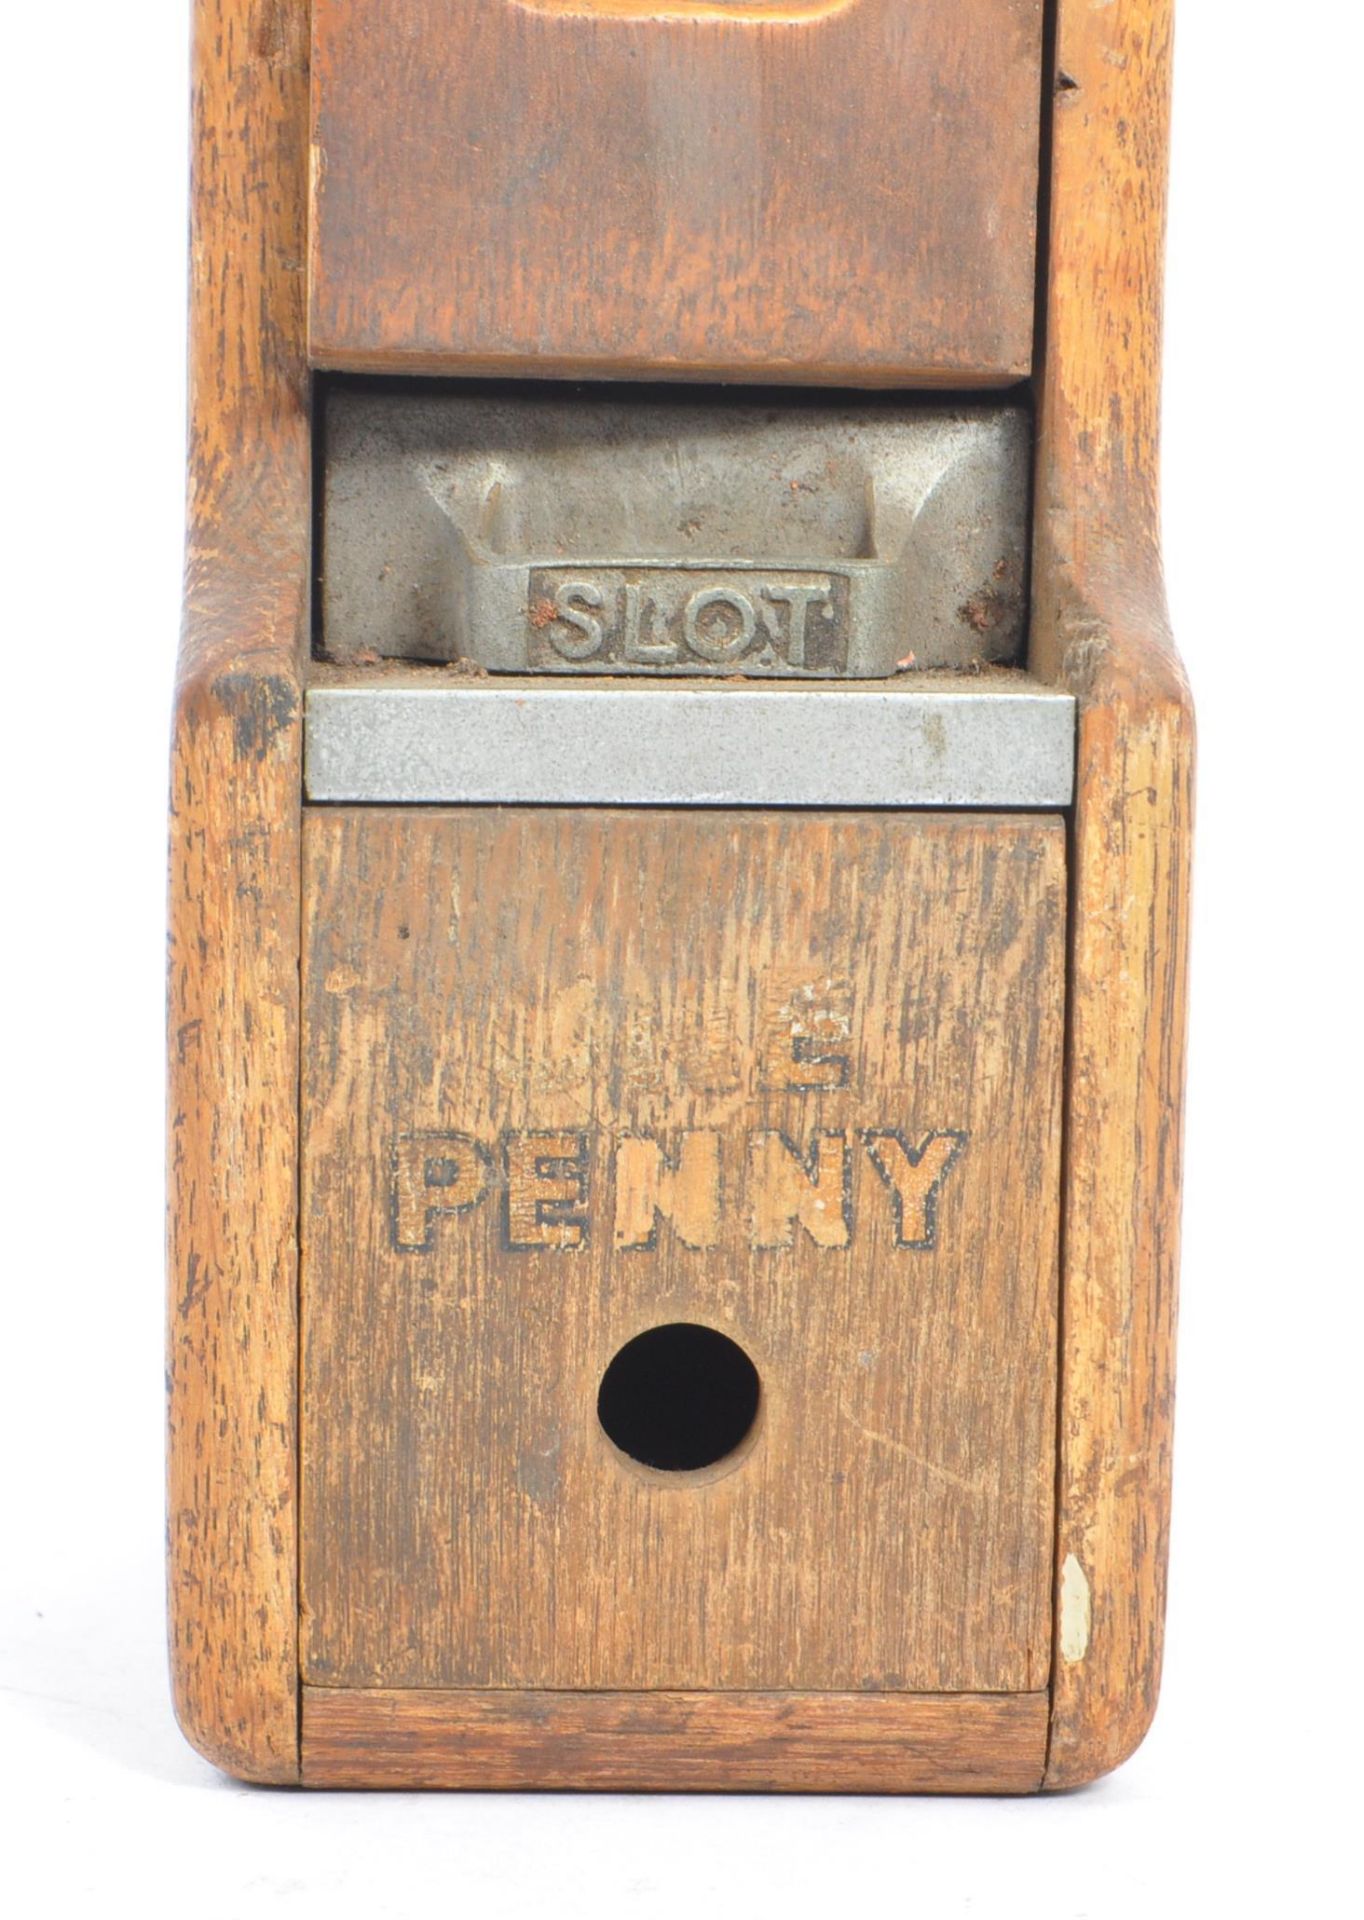 EARLY 20TH CENTURY OAK WALL MOUNTED MATCH BOX DISPENSER - Image 6 of 8